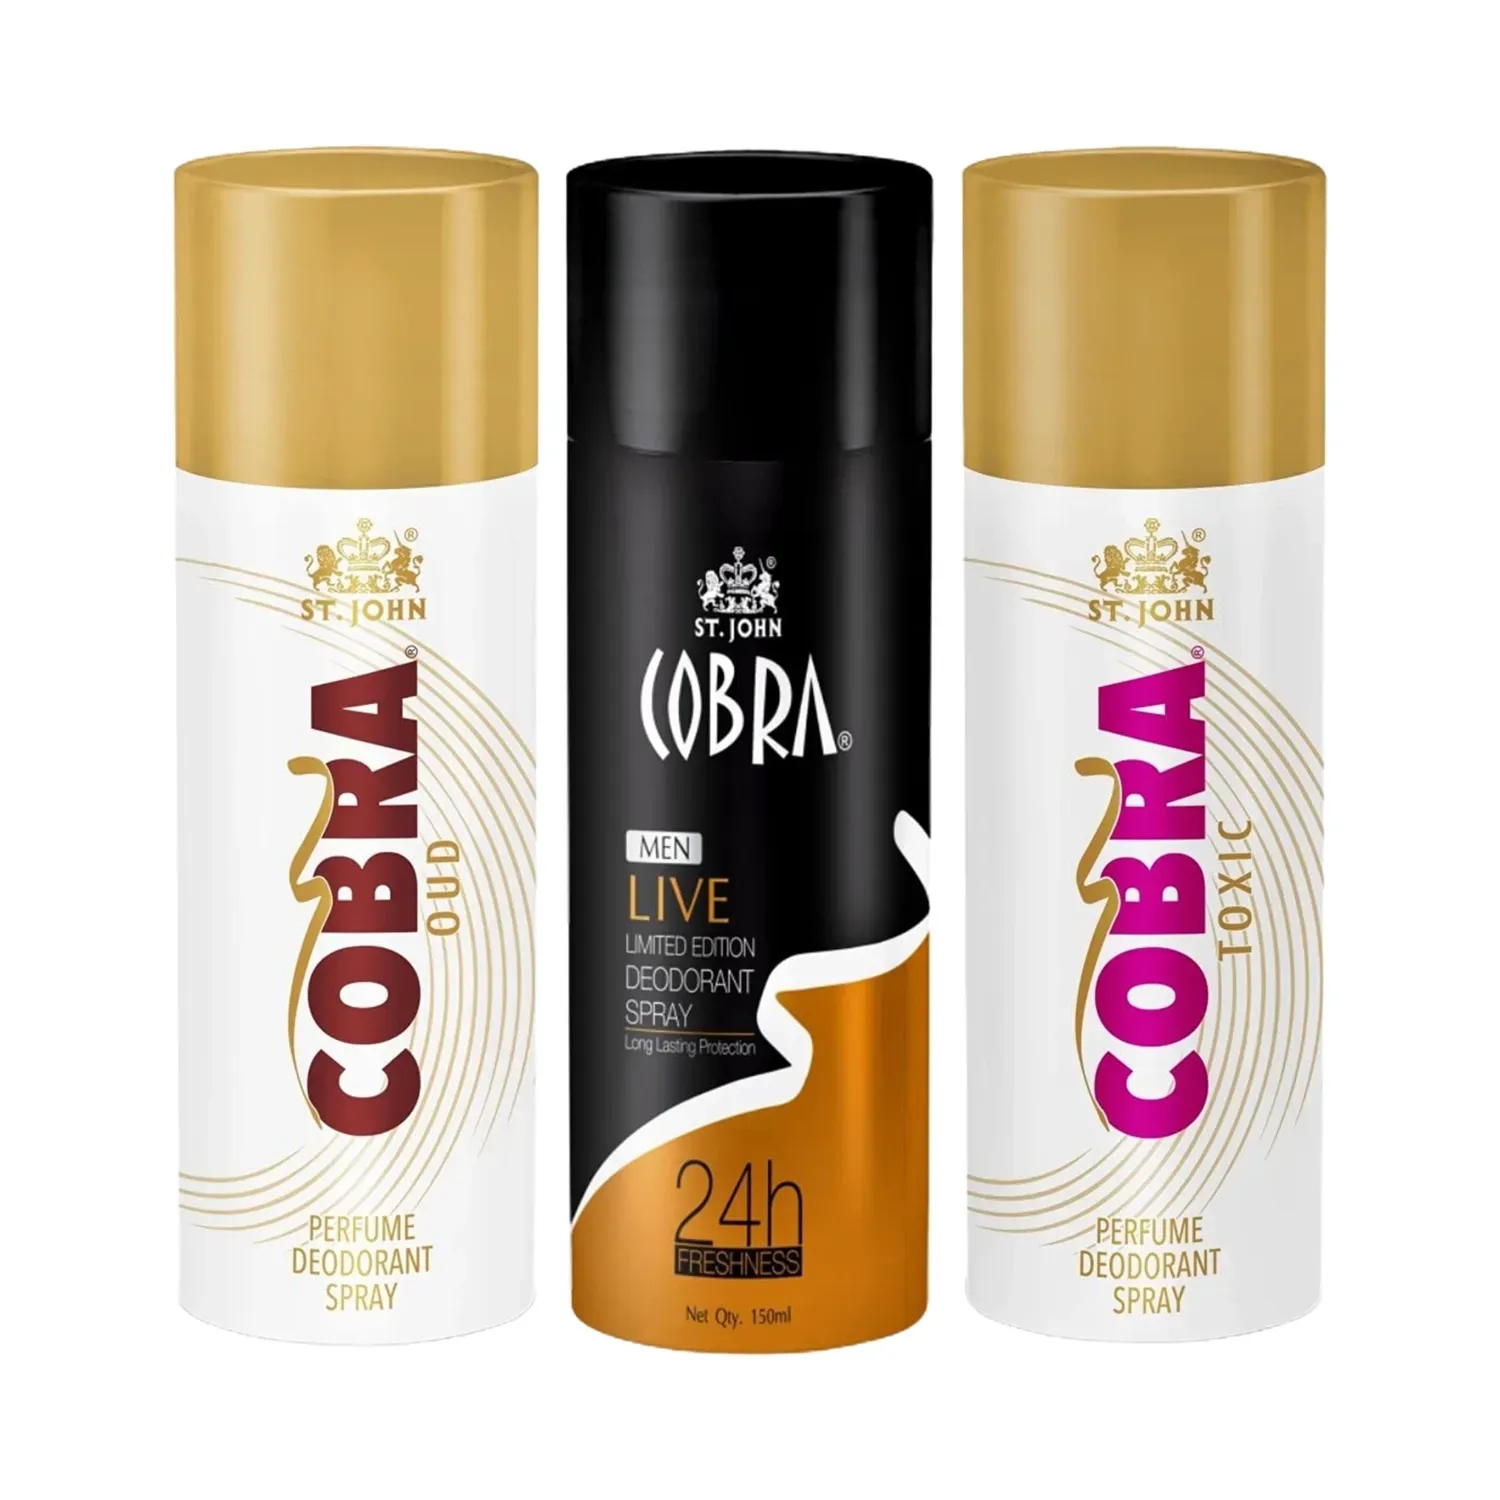 ST.JOHN Cobra Live, Oud And Toxic Limited Edition Deodorant Spray (3 Pcs)